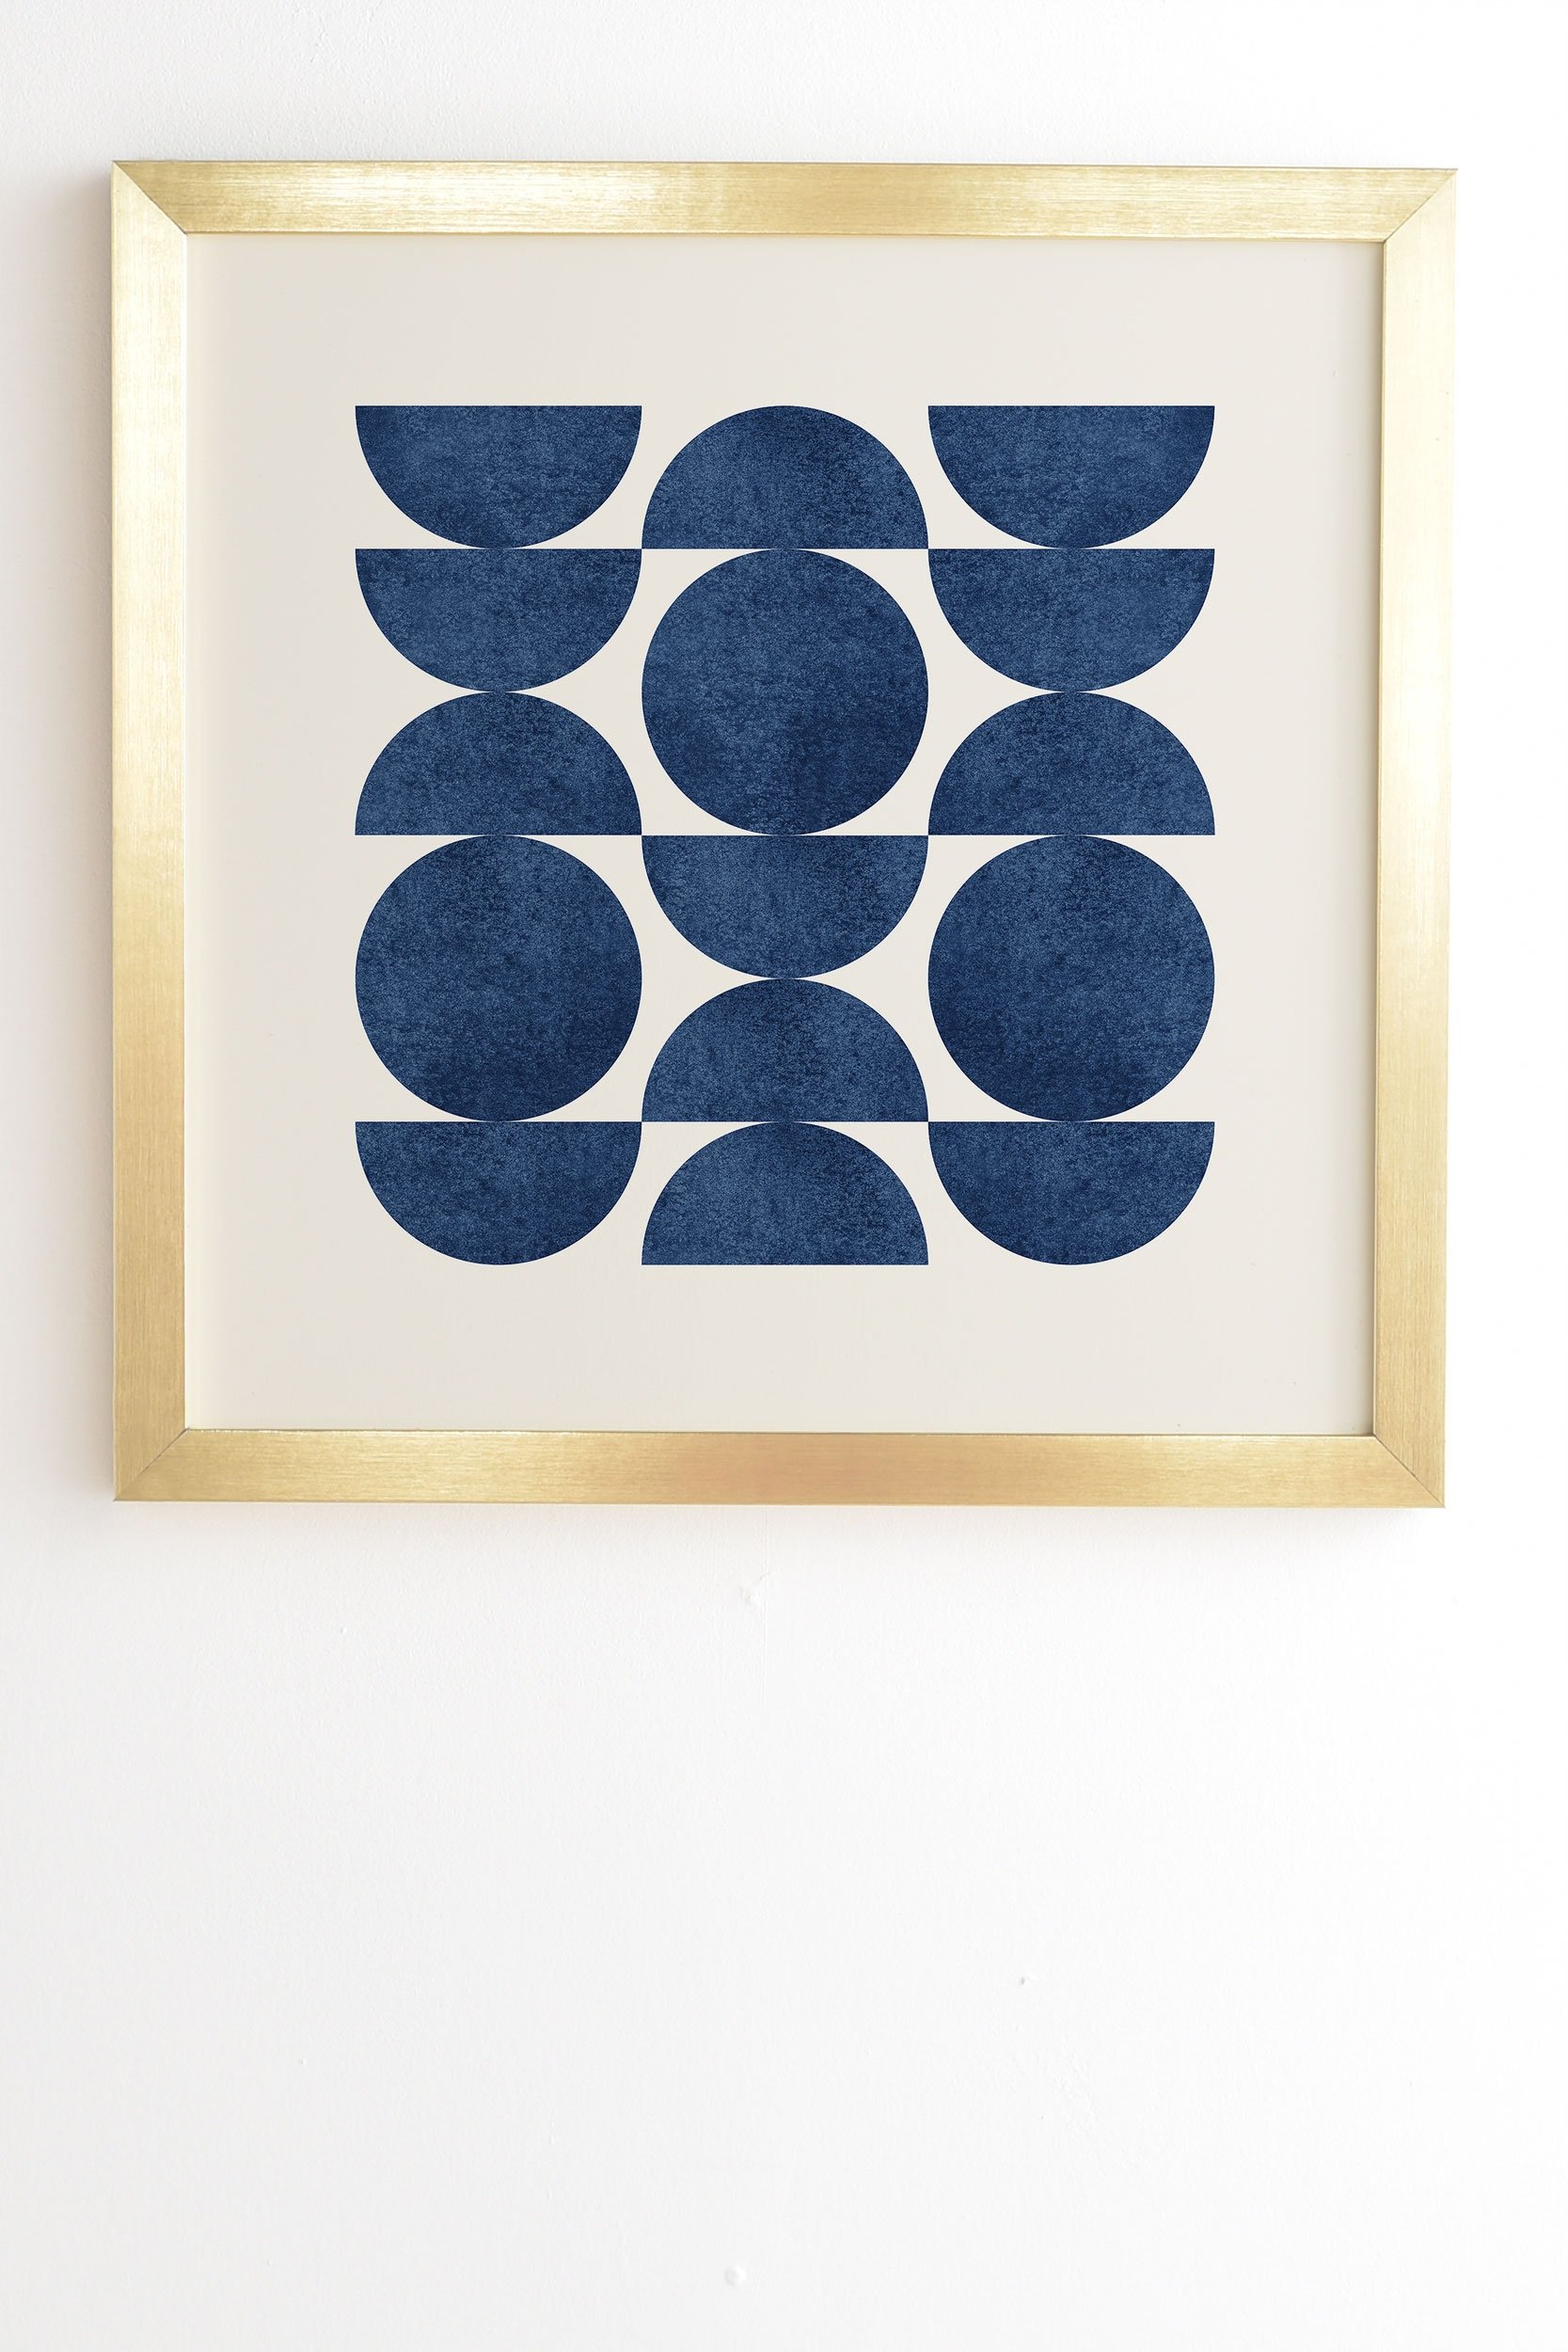 Blue Navy Retro Scandinavian Mid Century by MoonlightPrint - Framed Wall Art Basic Gold 11" x 13" - Image 1